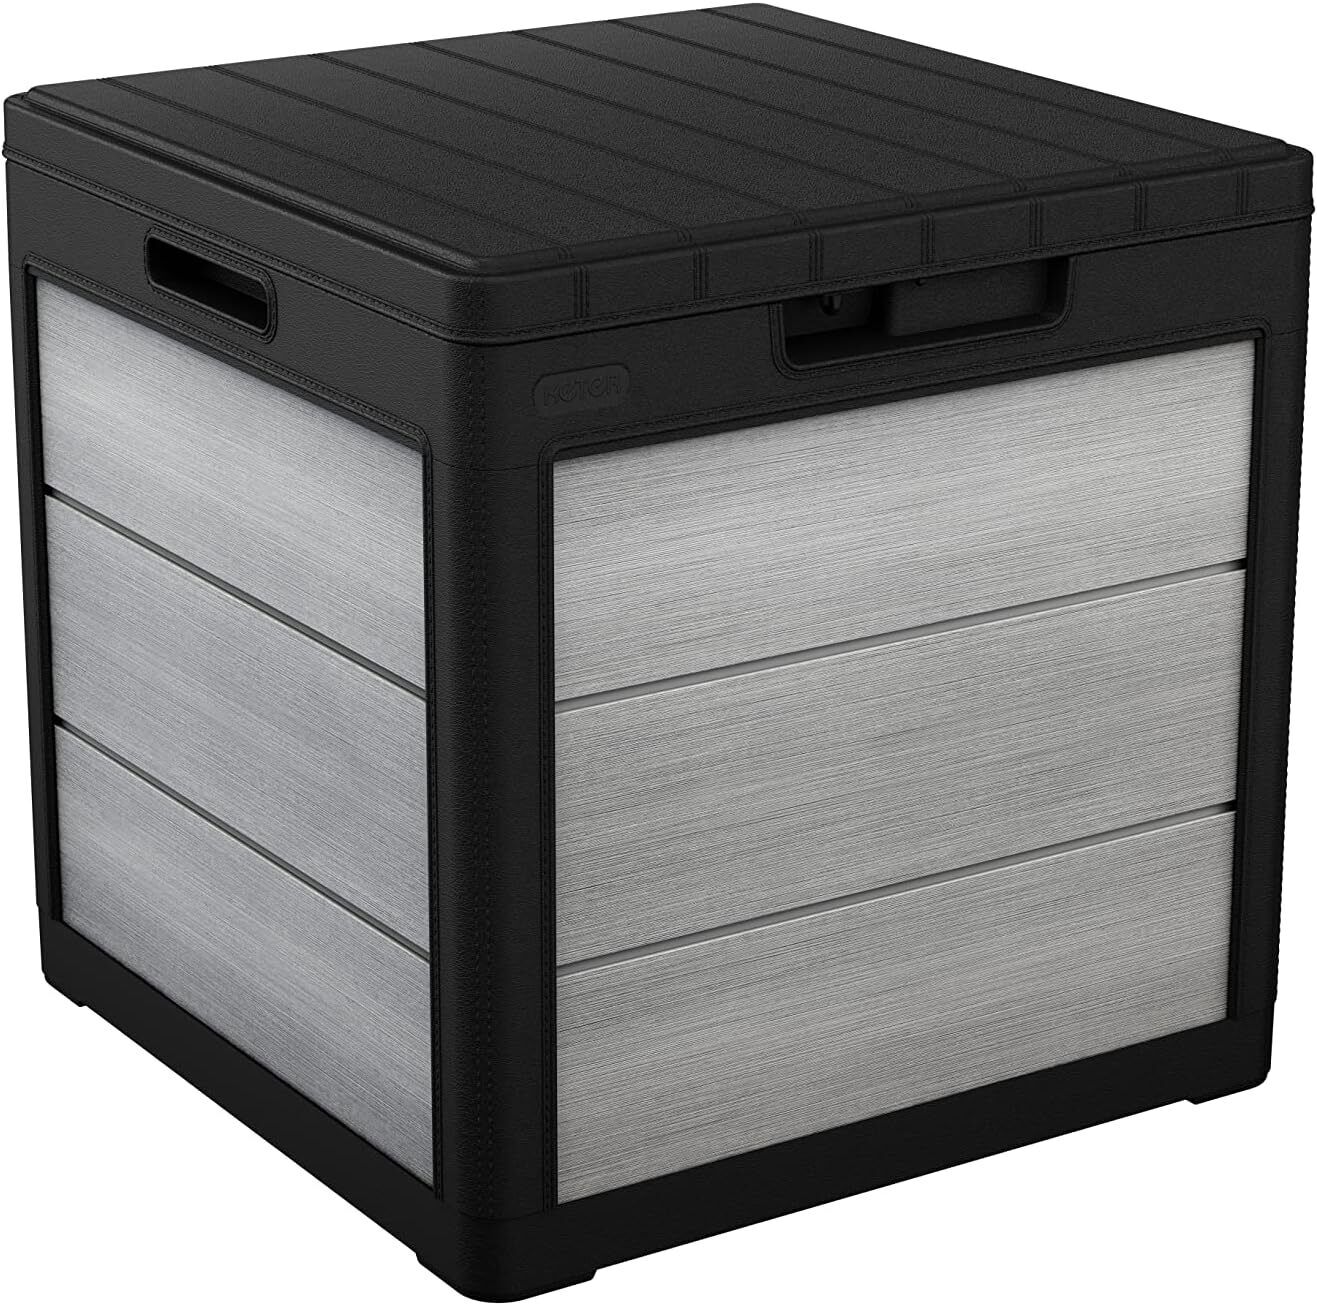 Keter Denali 30 Gallon Resin Deck Box for Patio Furniture, Pool Accessories